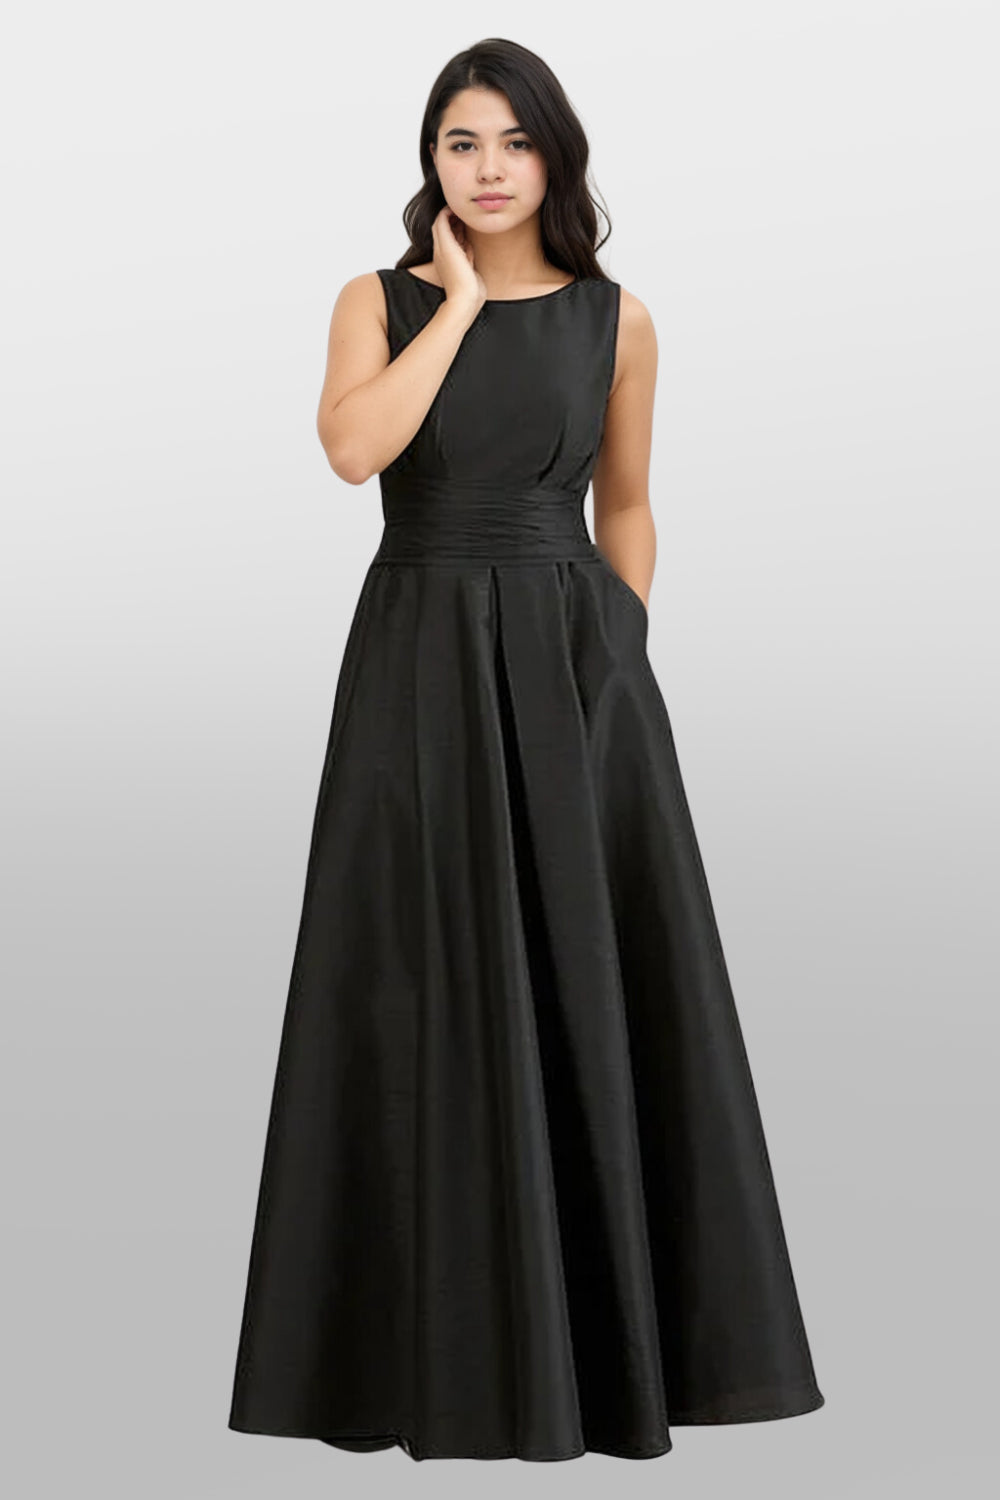 Gleeful Black Dress